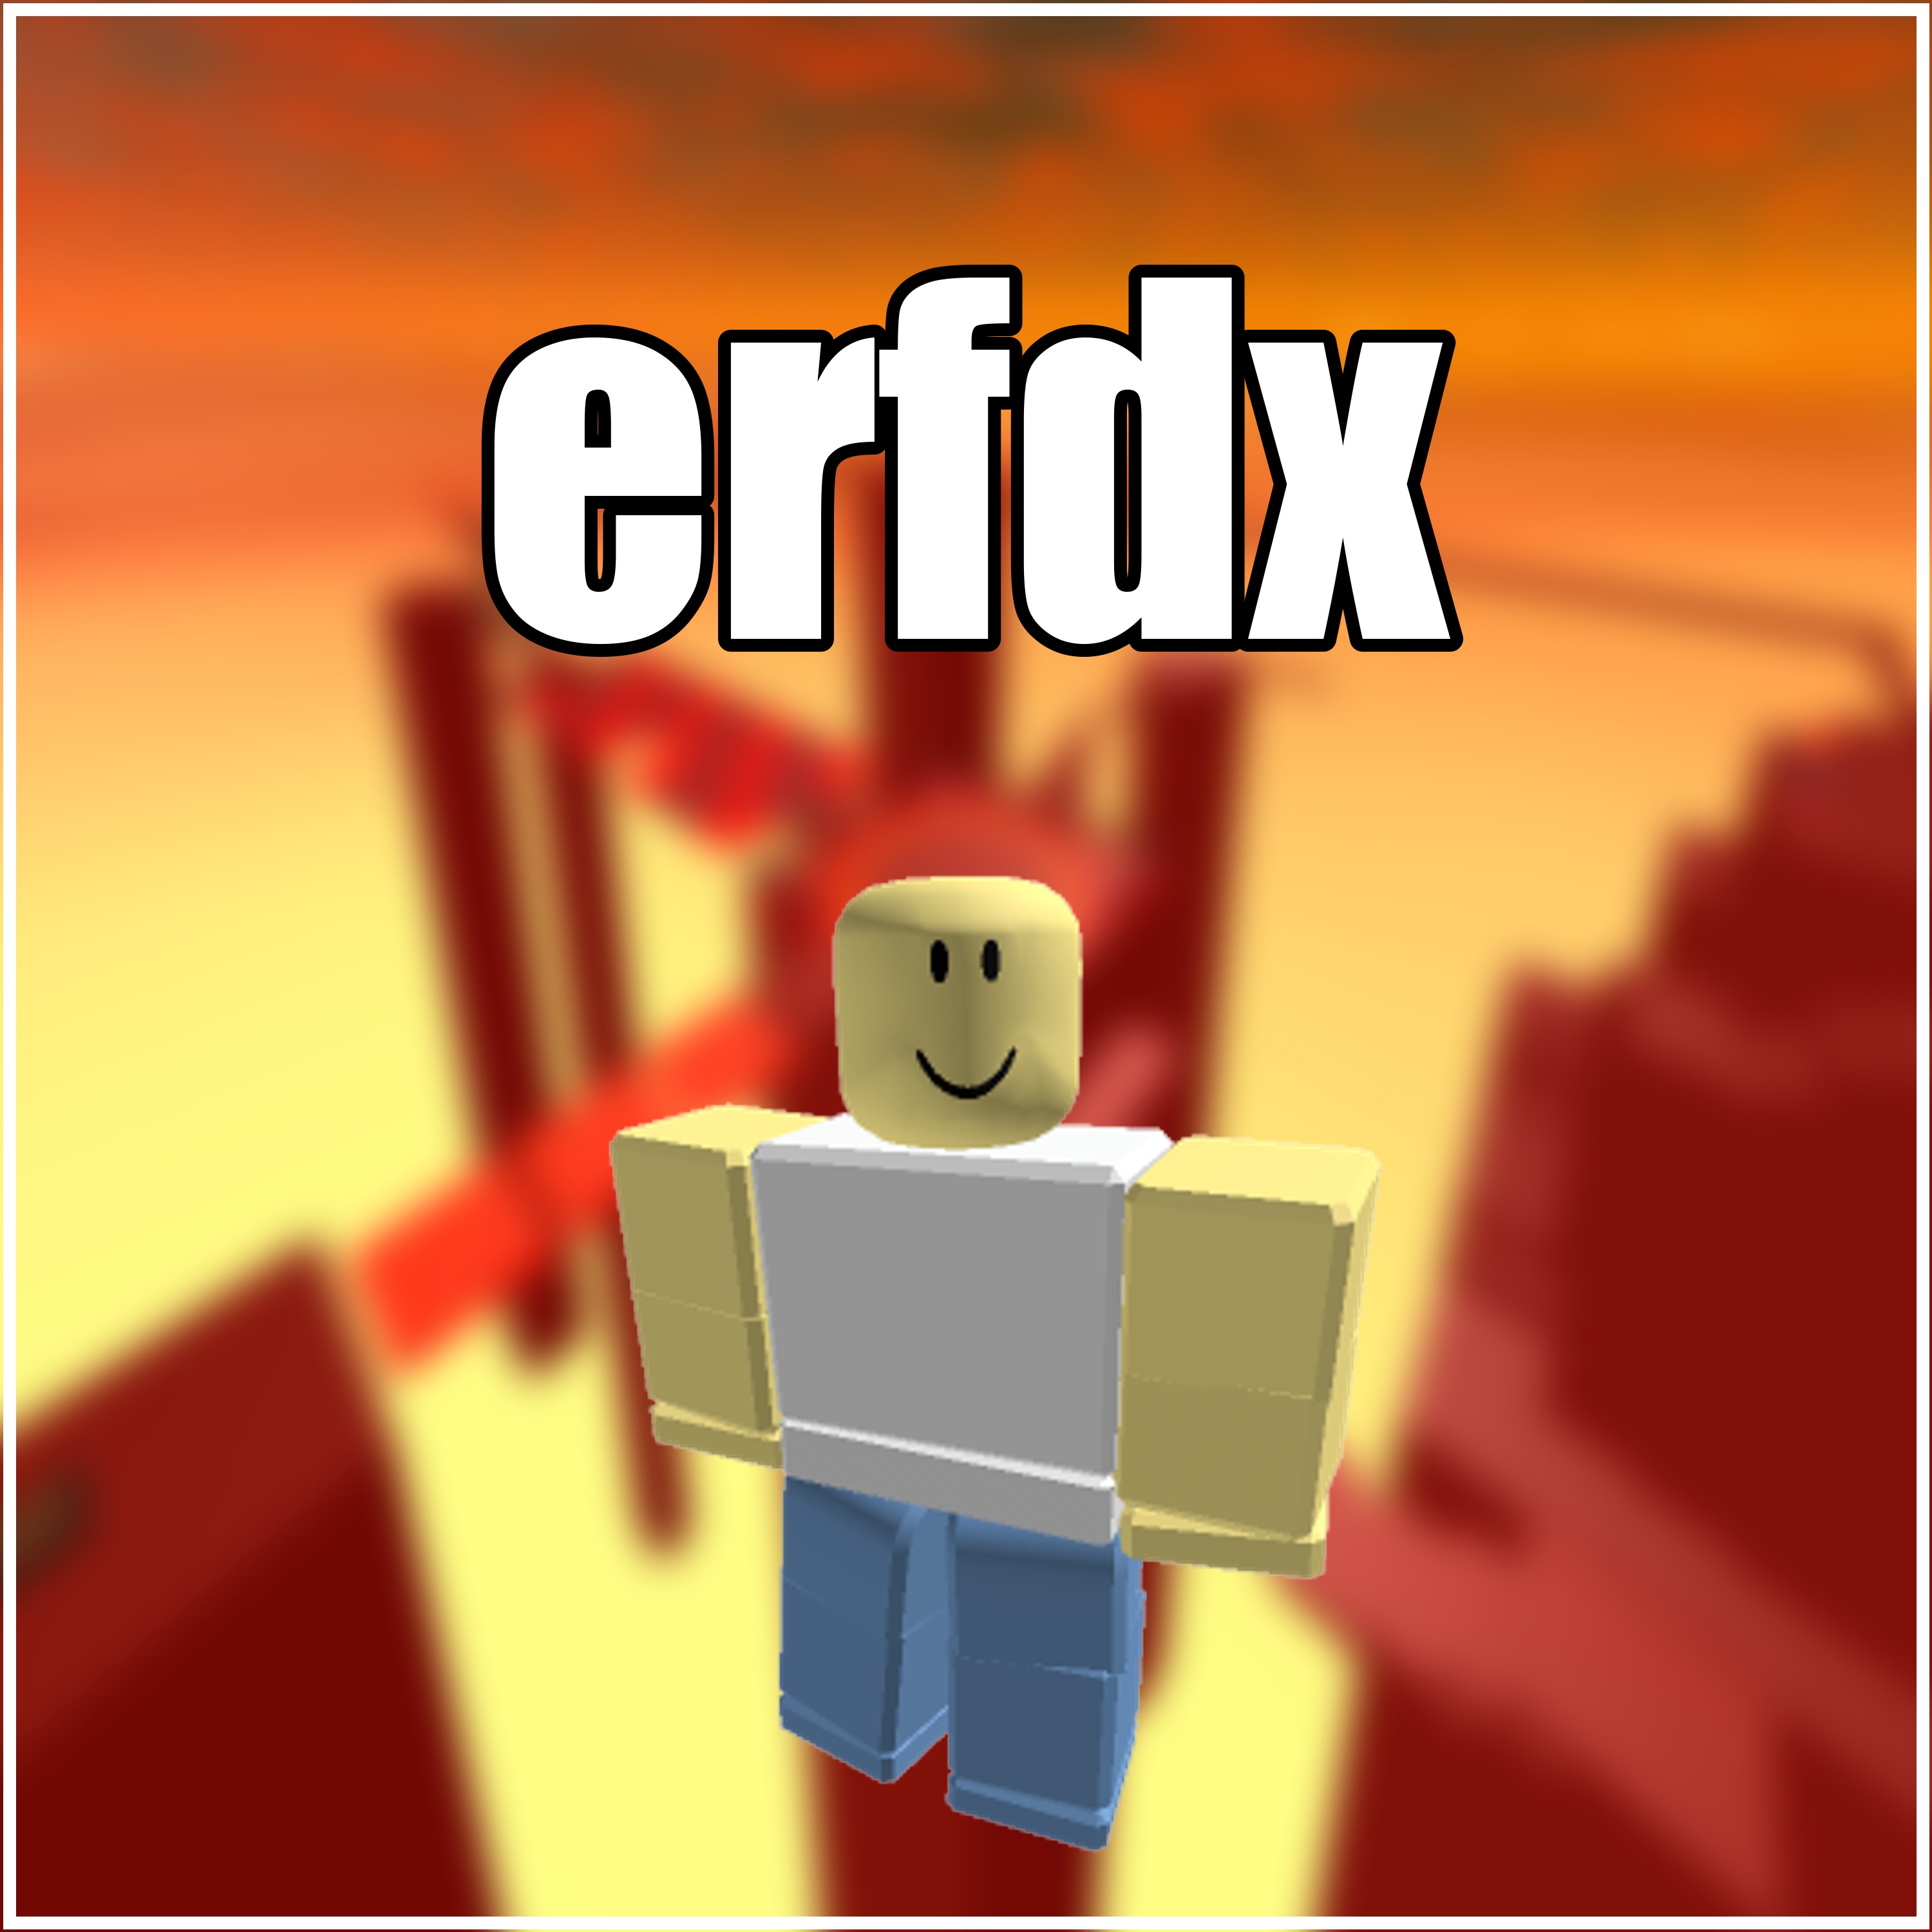 robruh RARE username "erfdx" ROBLOX account guaranteed to be unverified!